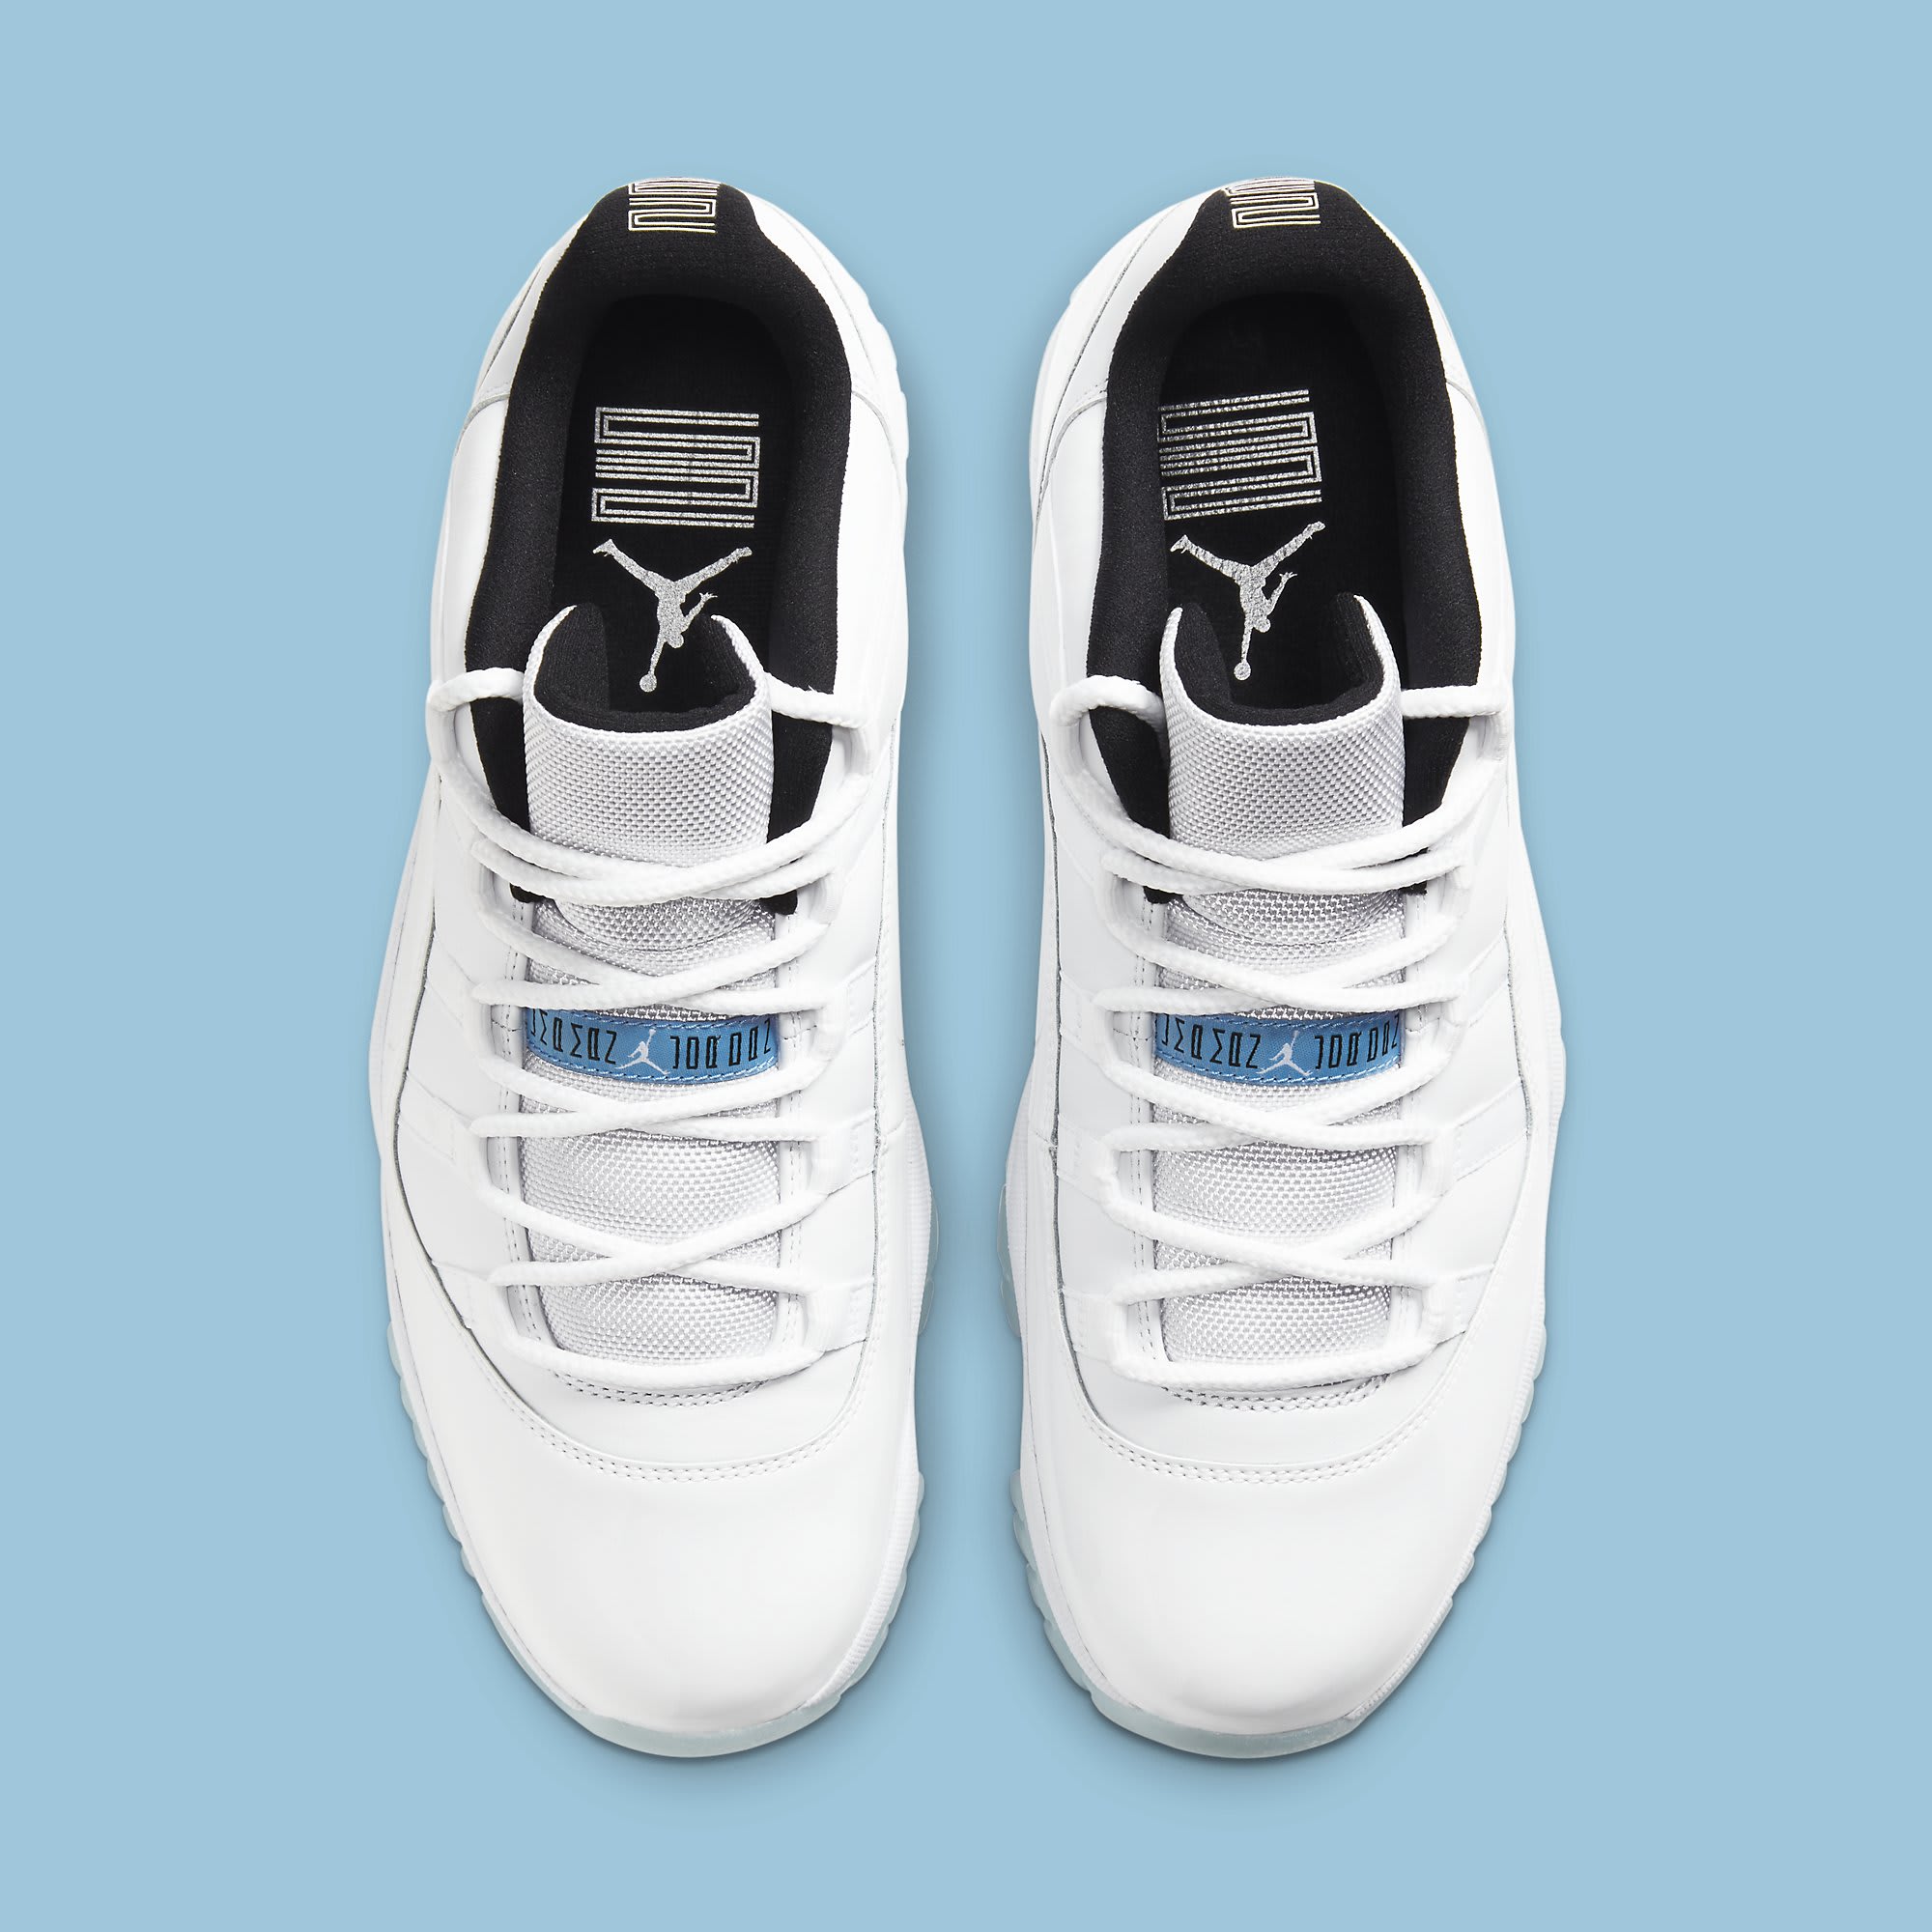 jordan retro 11 blue and white release date